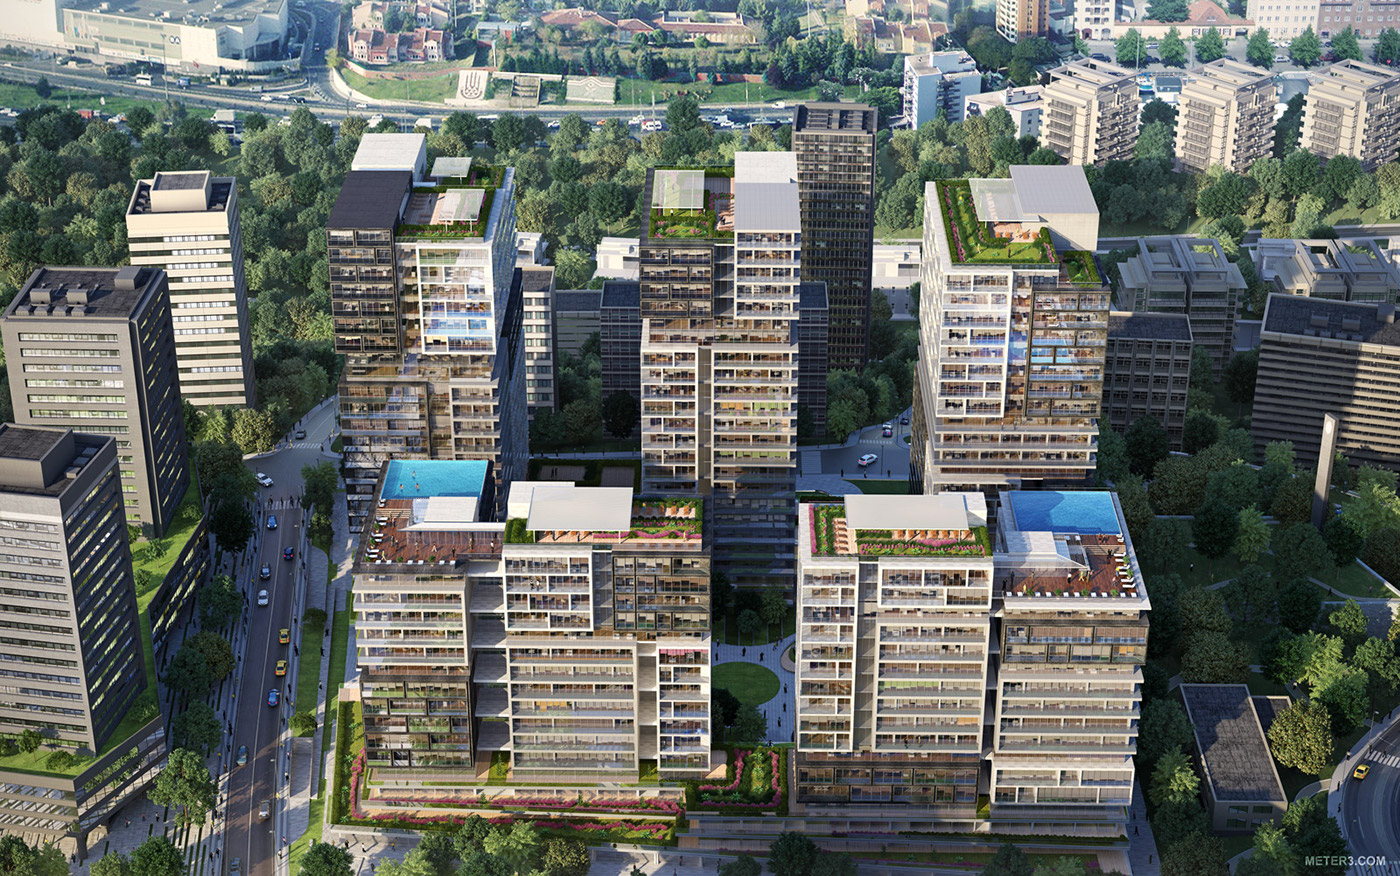 Apartment complex aerial city view